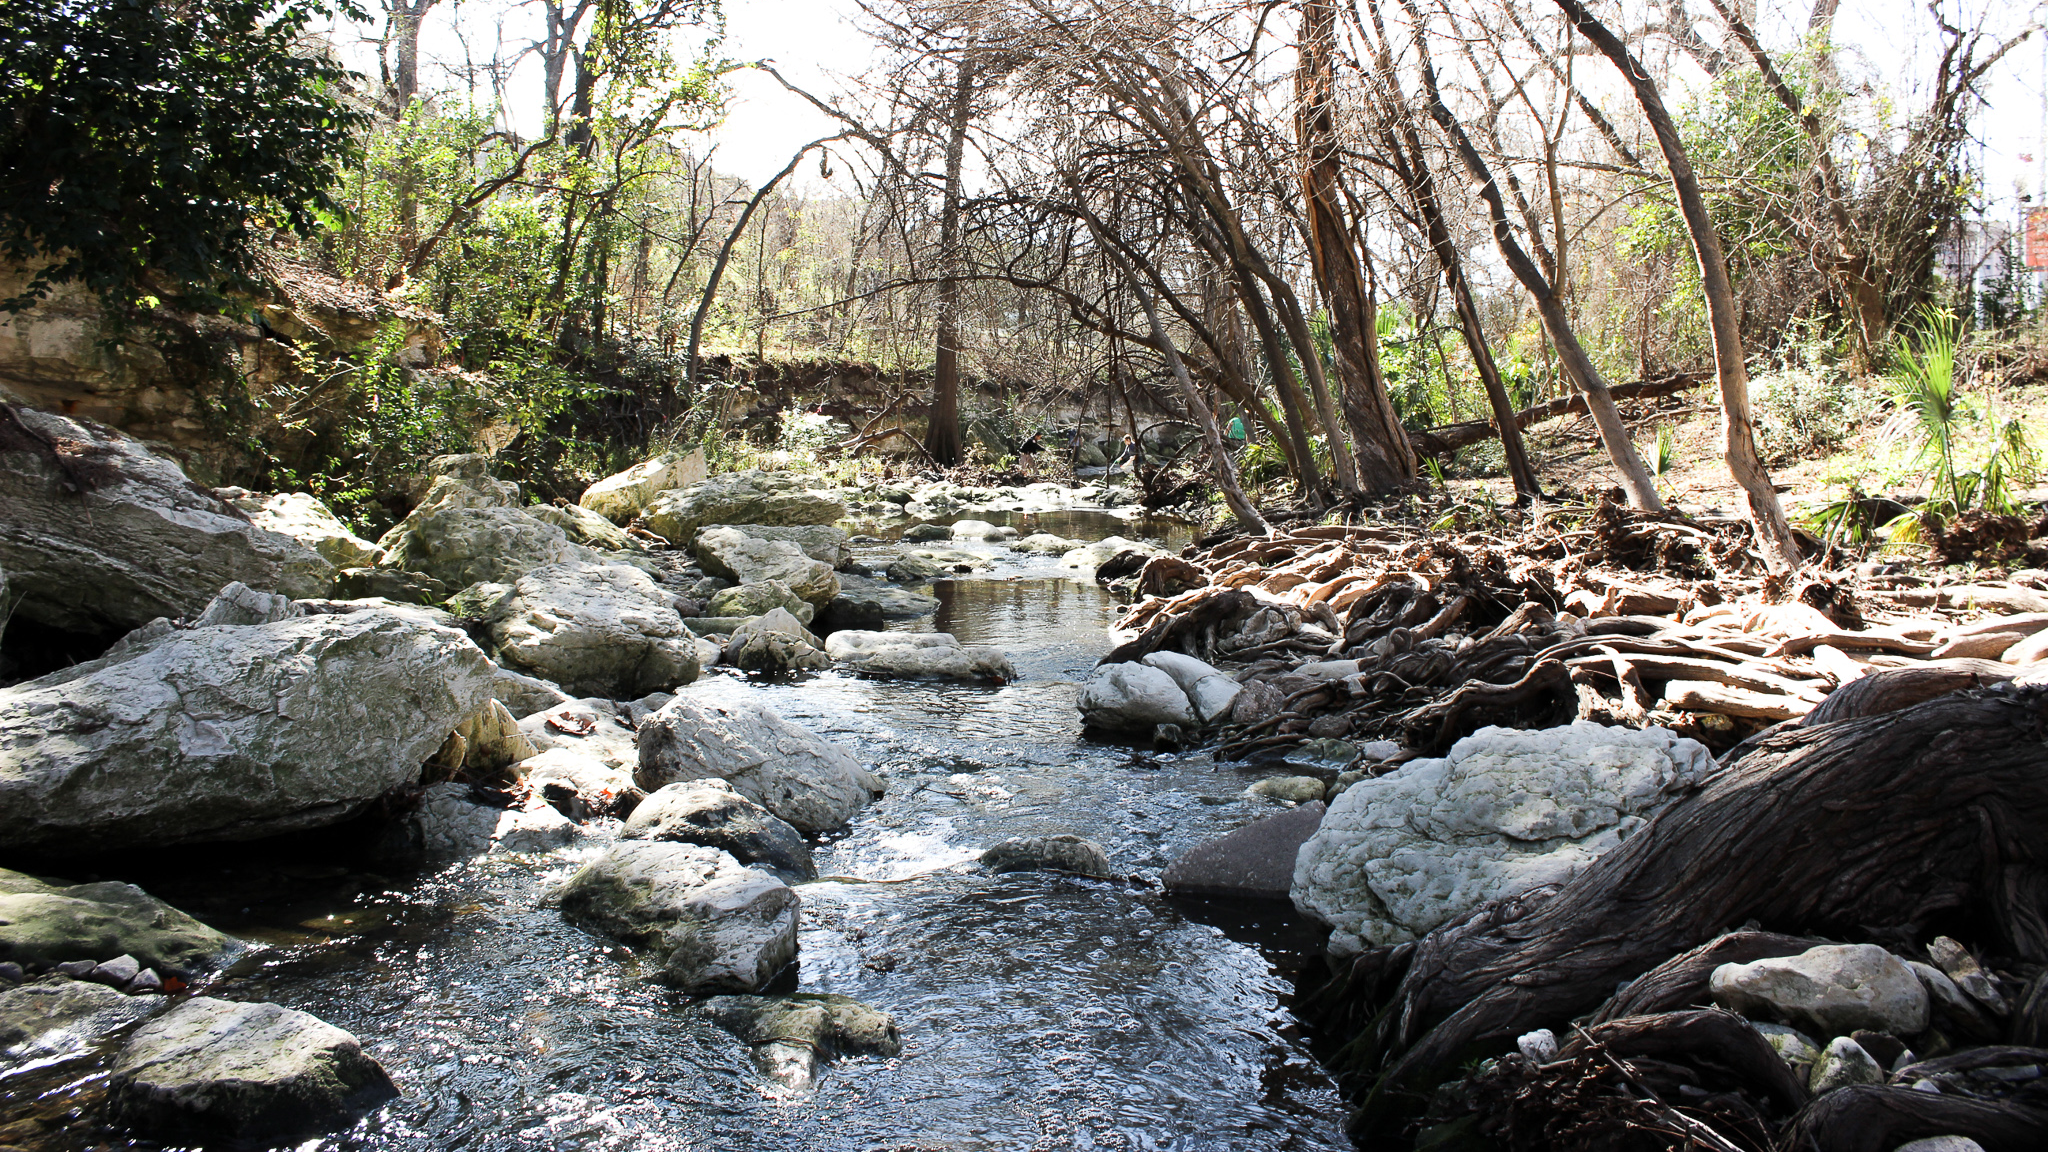 Water flows in Waller Creek